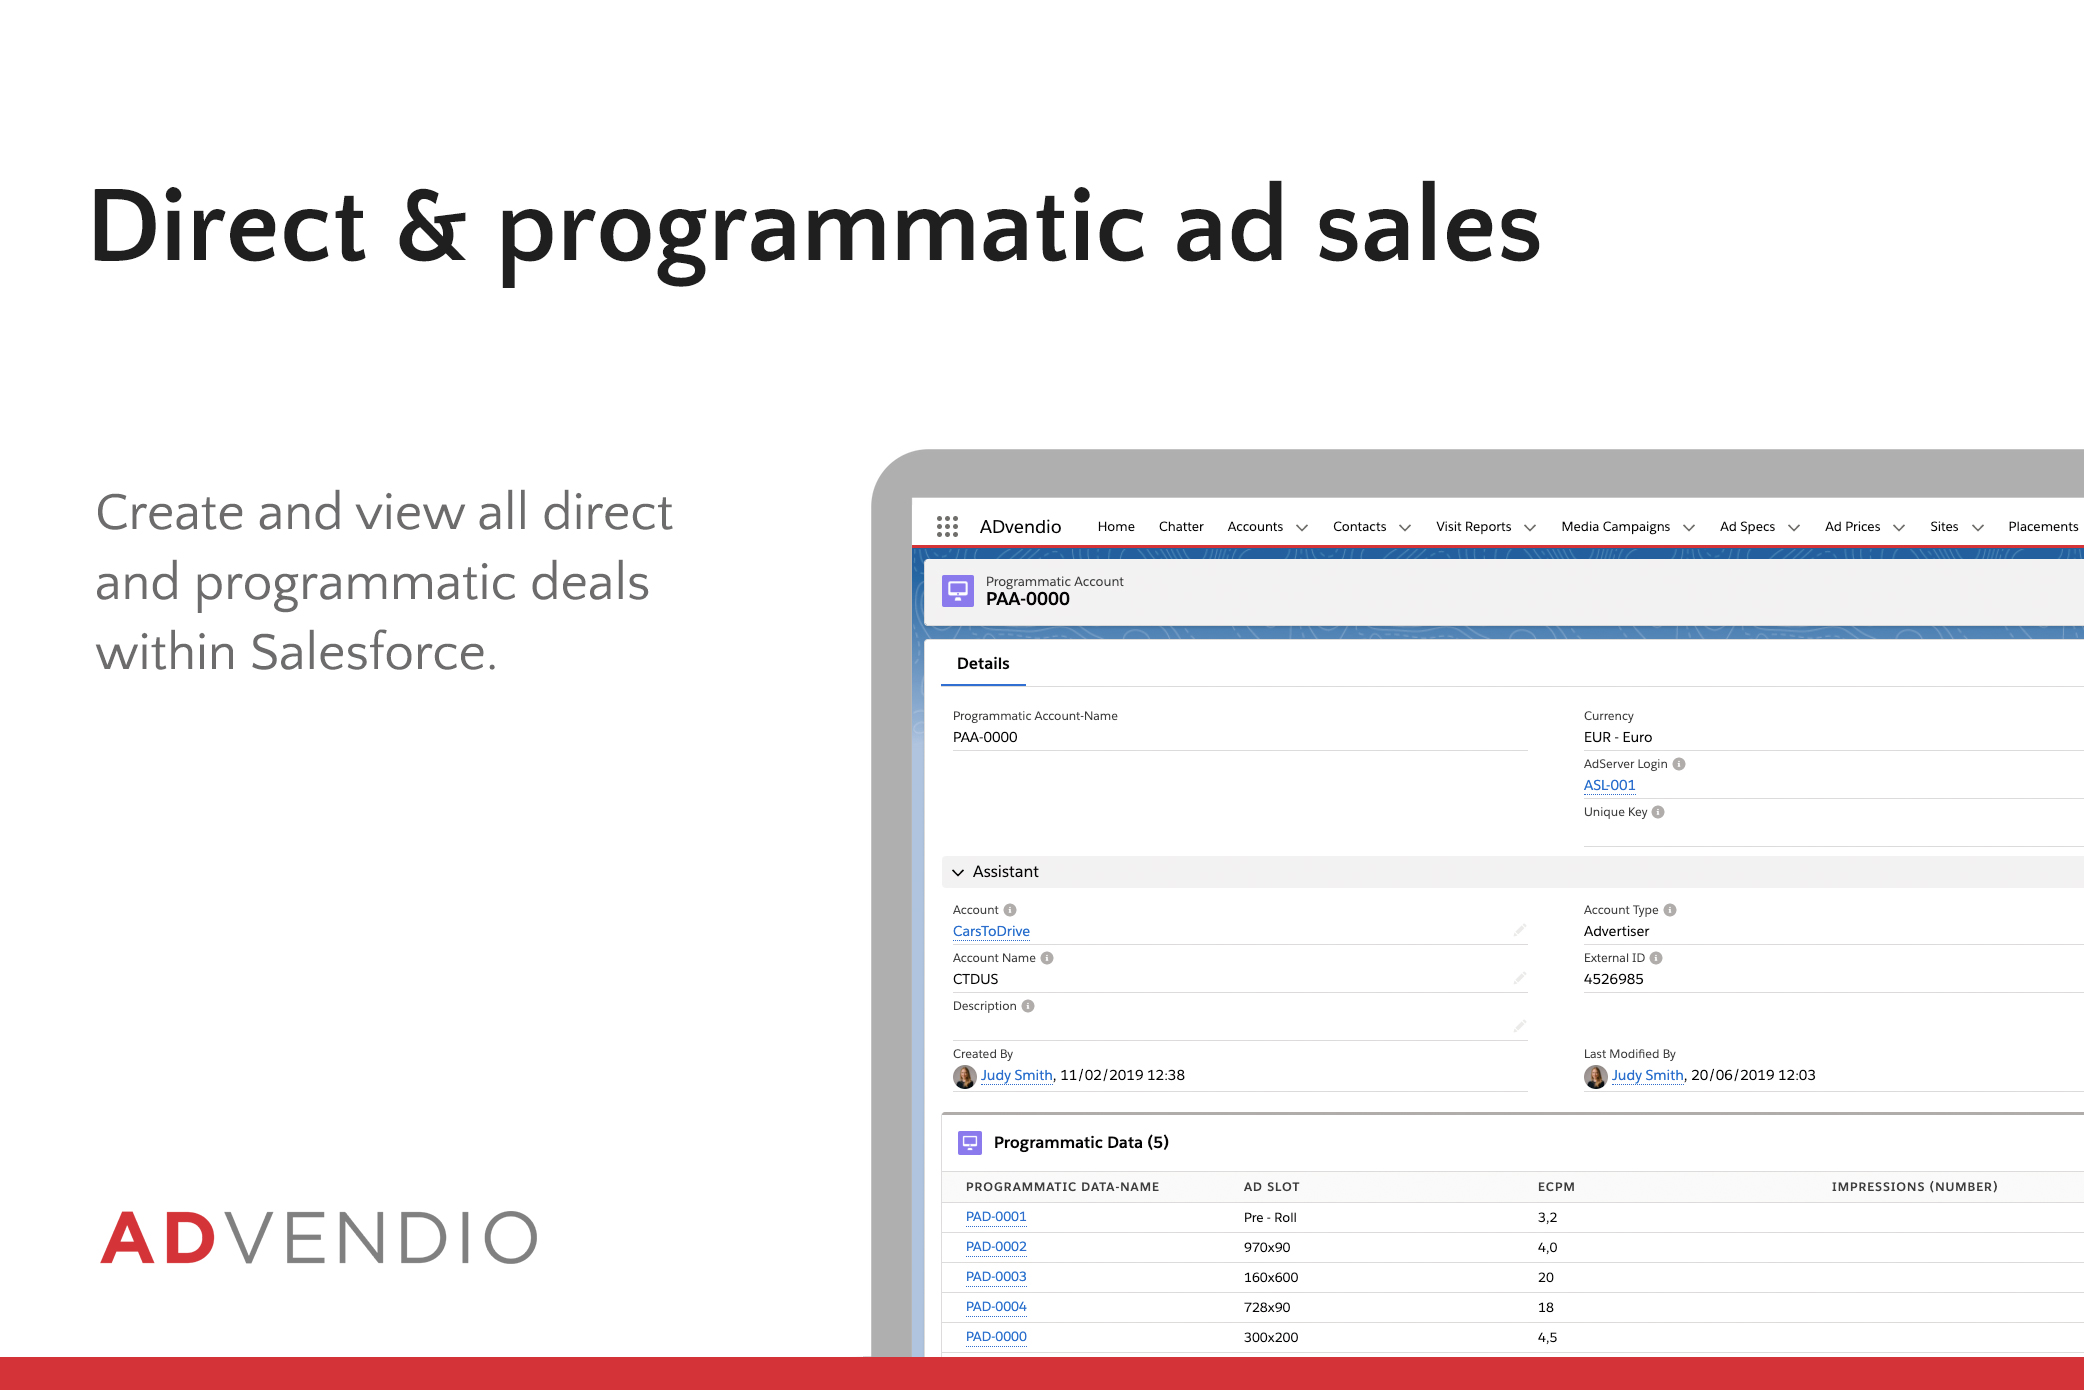 Direct & Programmatic Advertising Sales